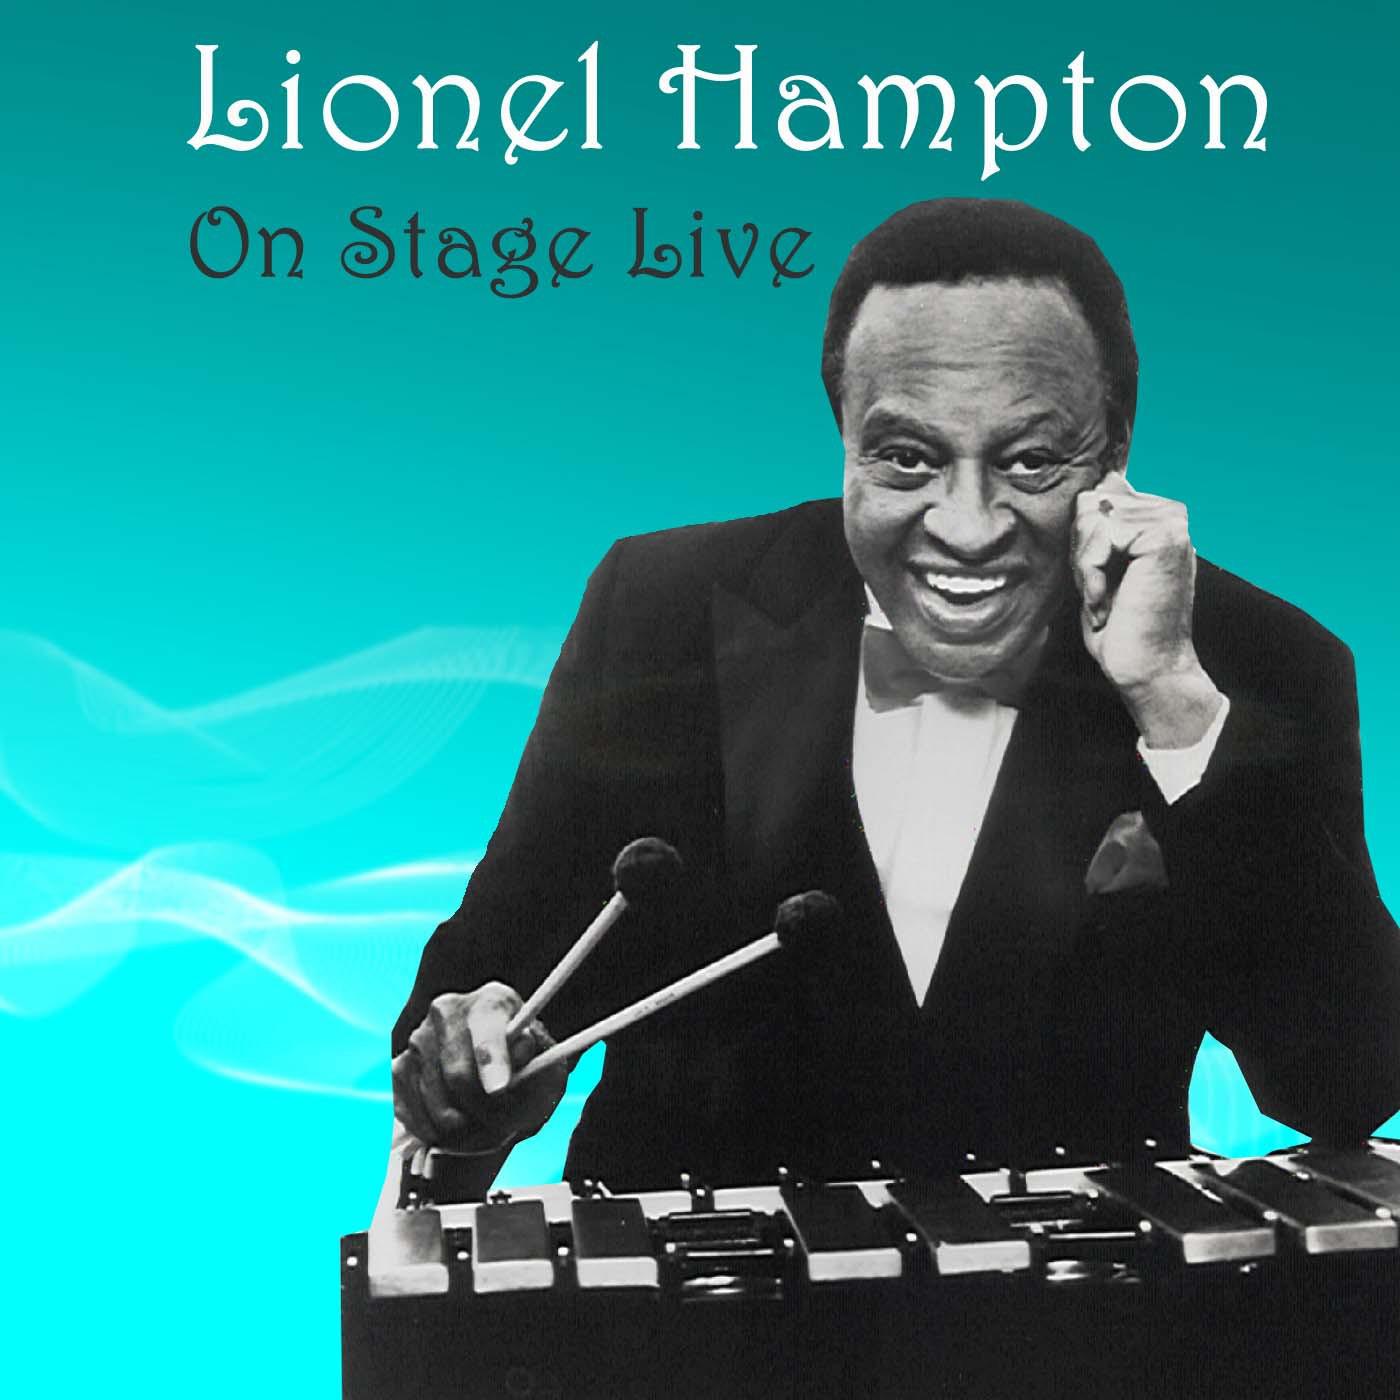 Lionel Hampton On Stage Live